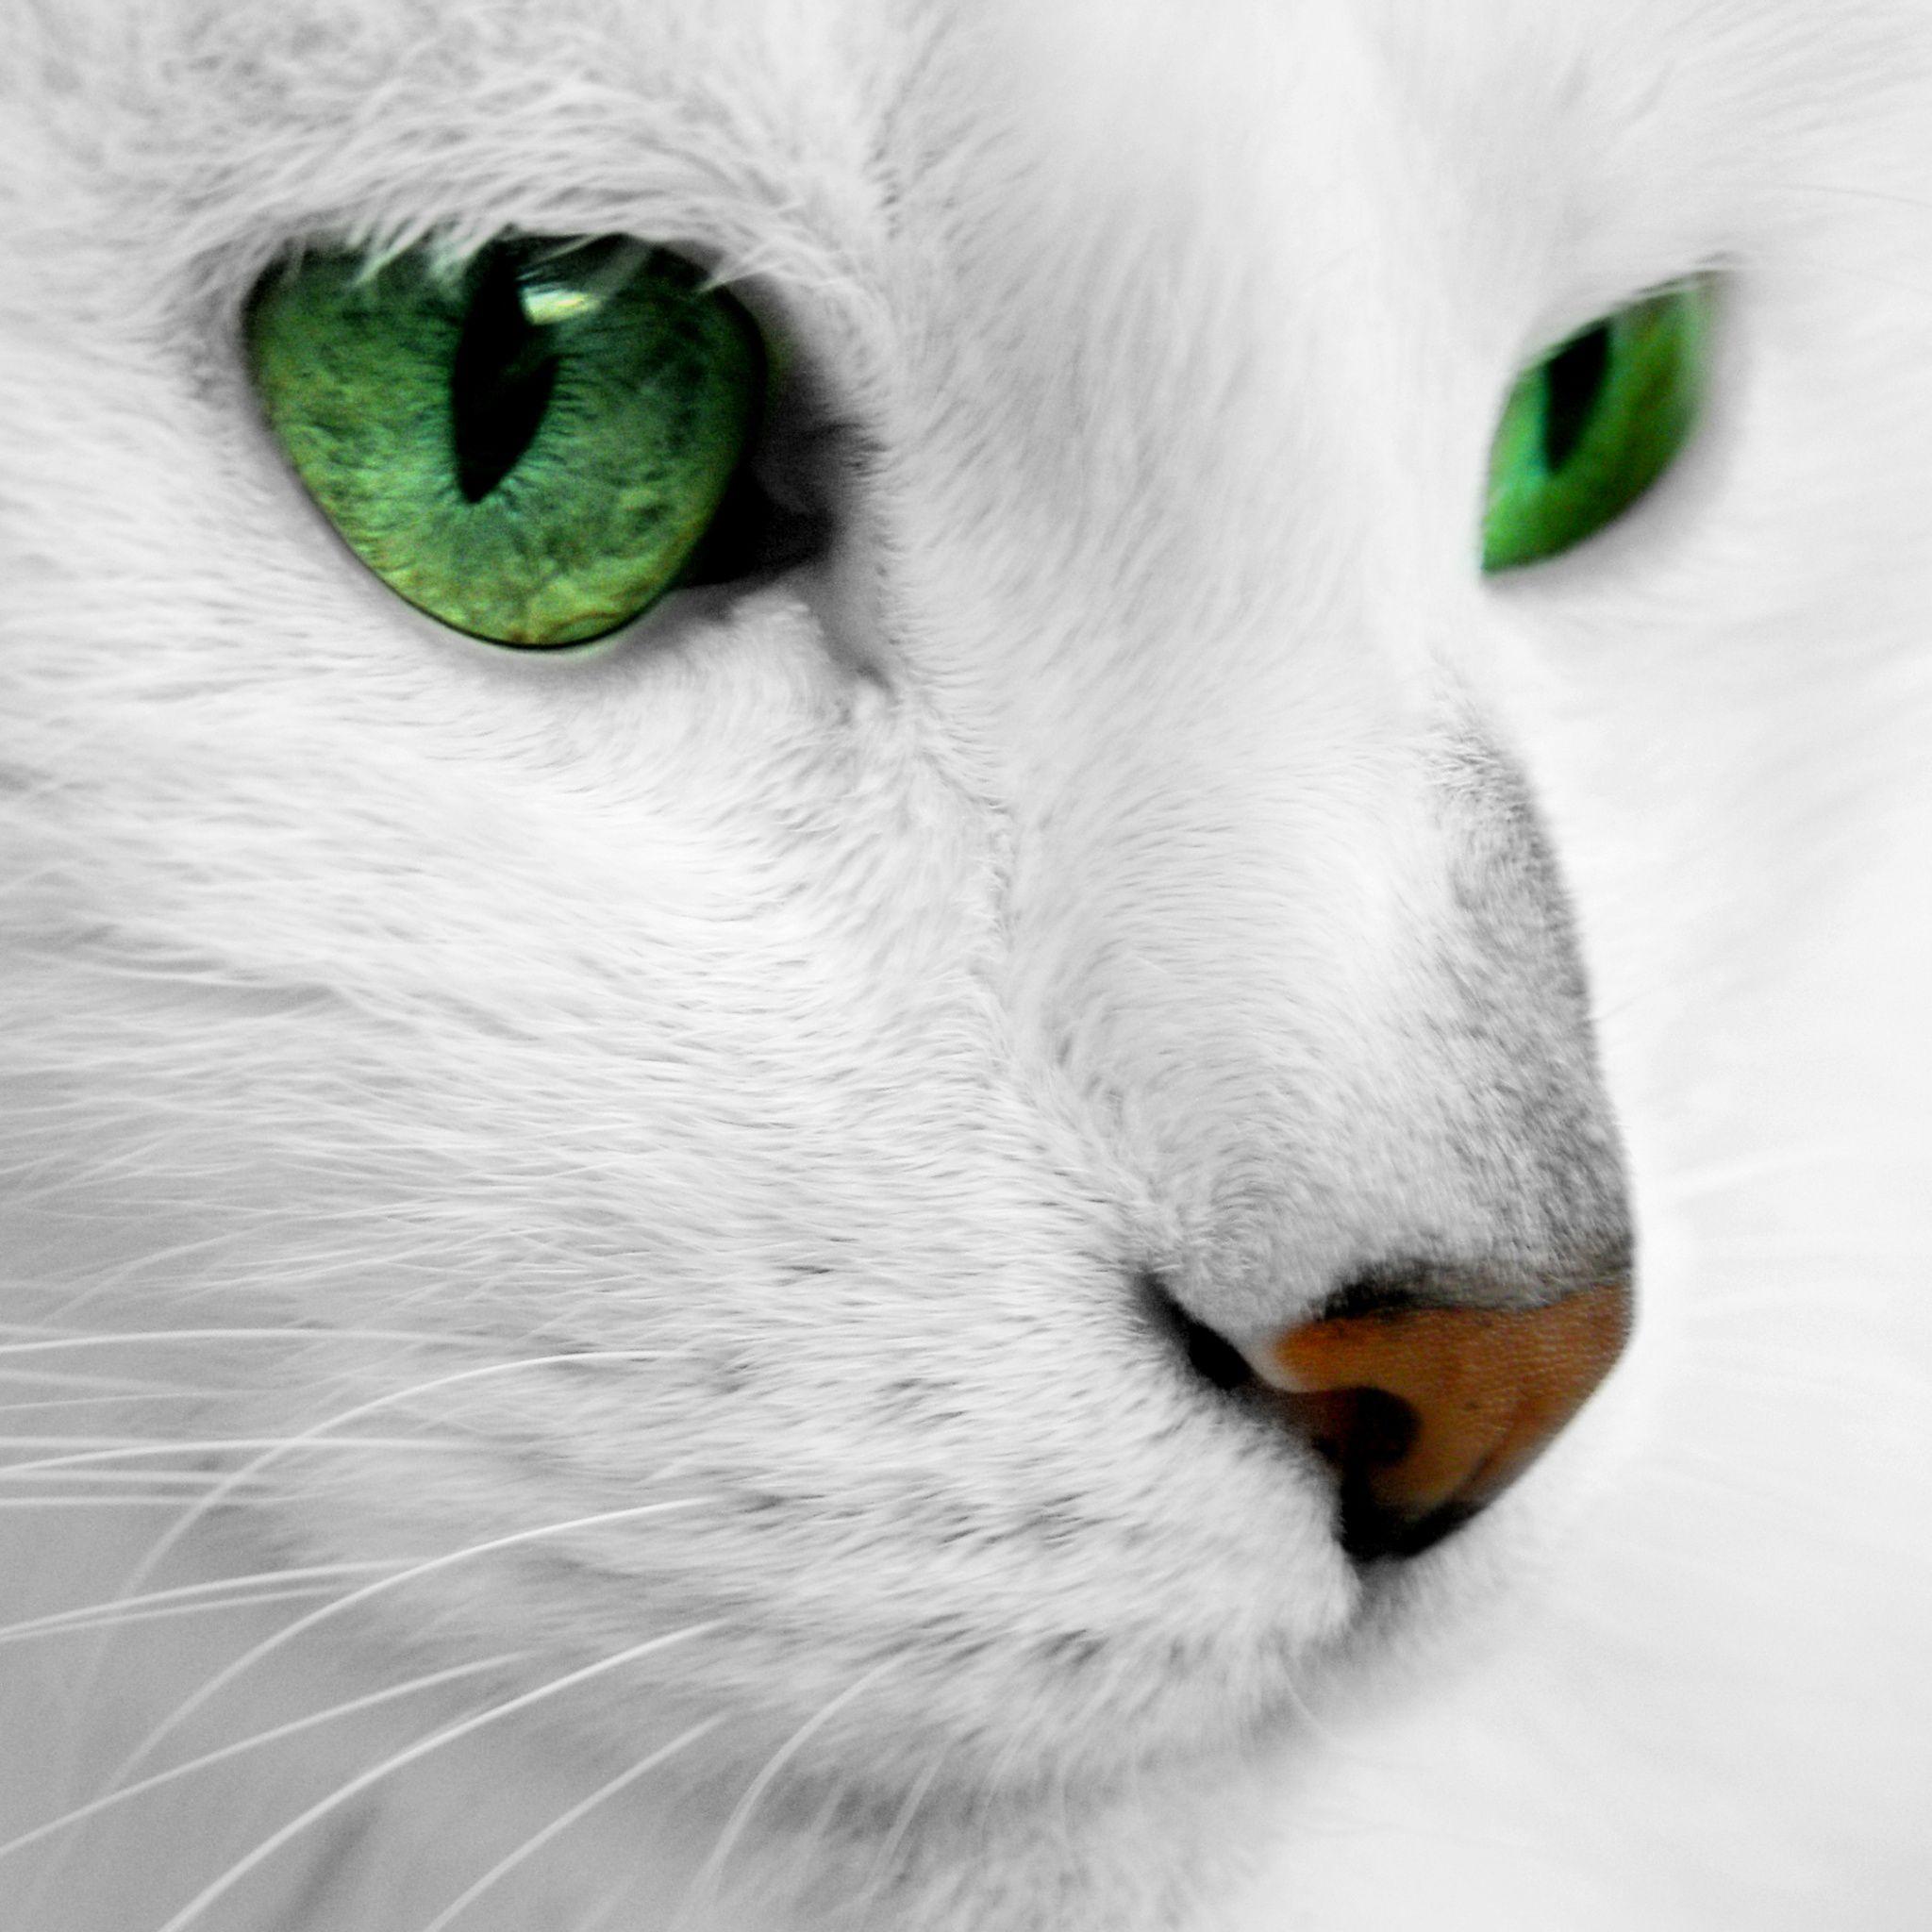 Cat Eye Green Retina Wallpaper for iPhone X, 6